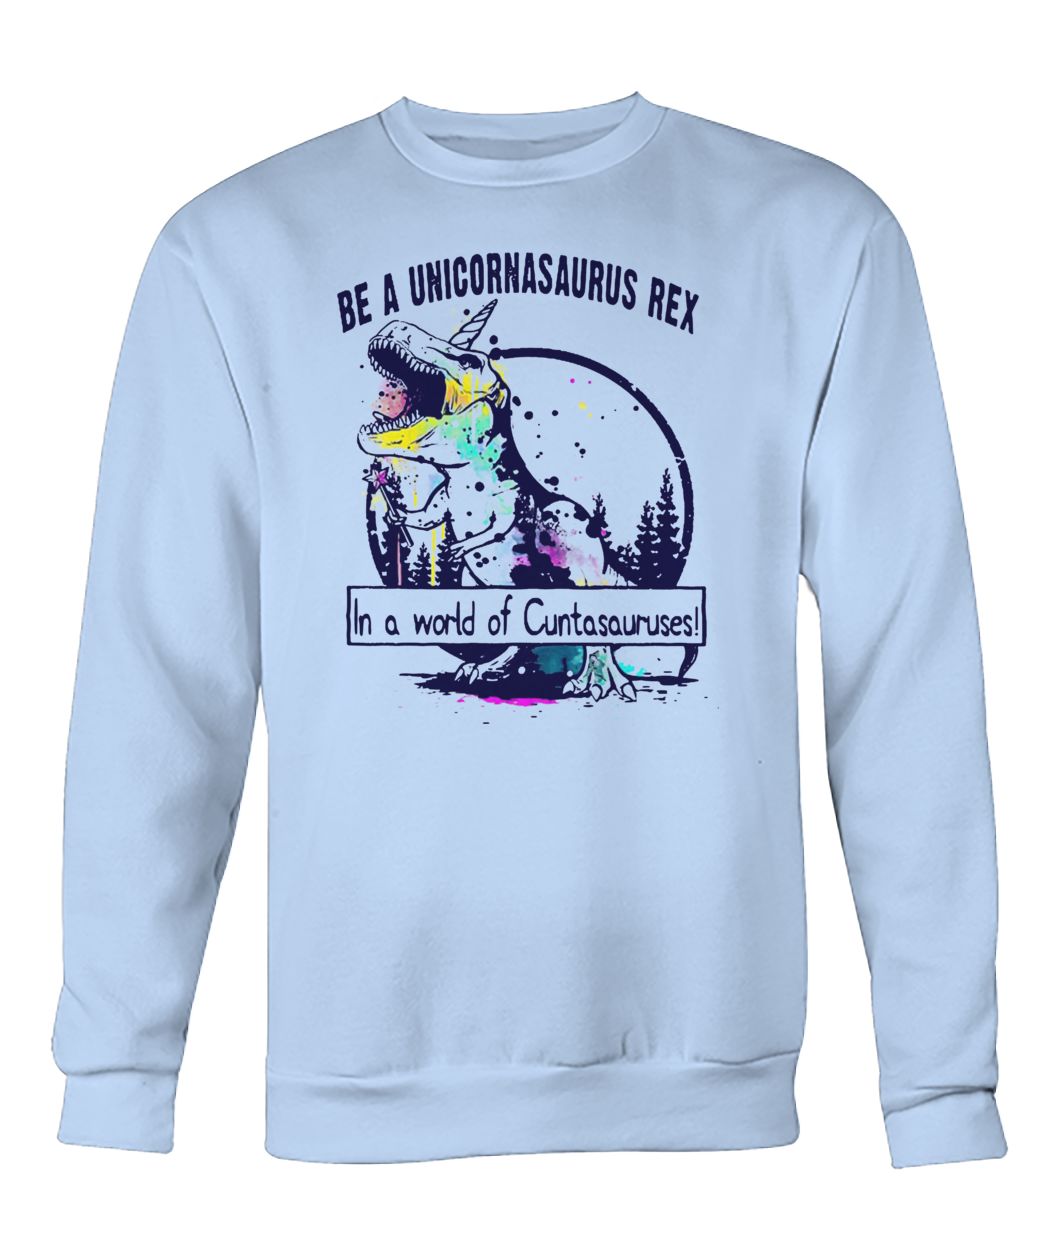 Be a unicornsaurus rex in a world of cuntasauruses crew neck sweatshirt